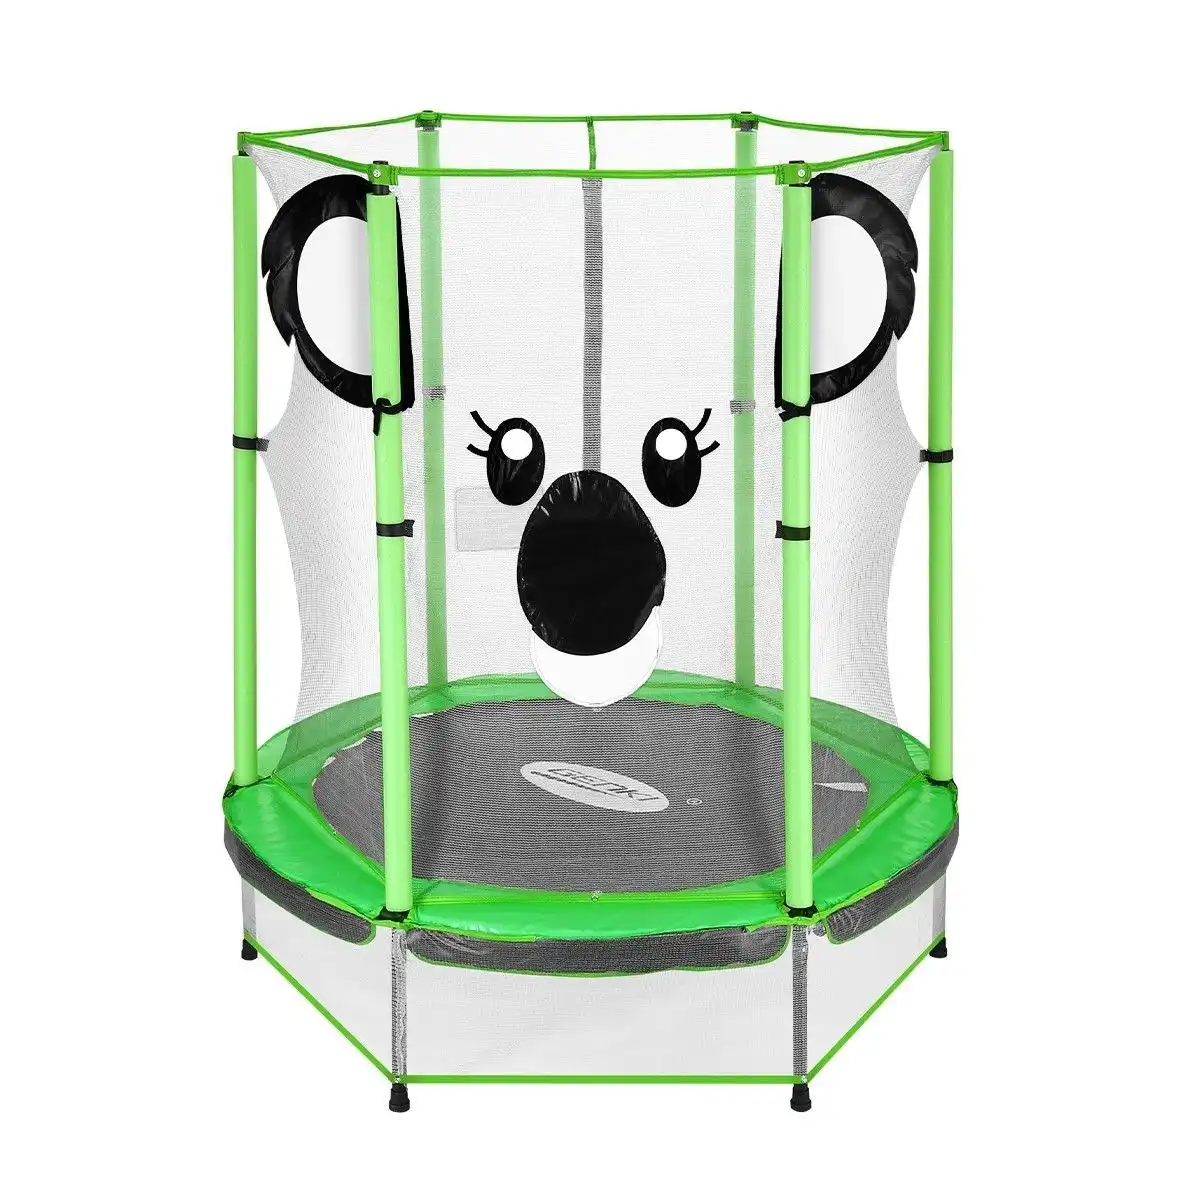 Genki  55 Inch Koala Trampoline for Kids with Safety Net Enclosure